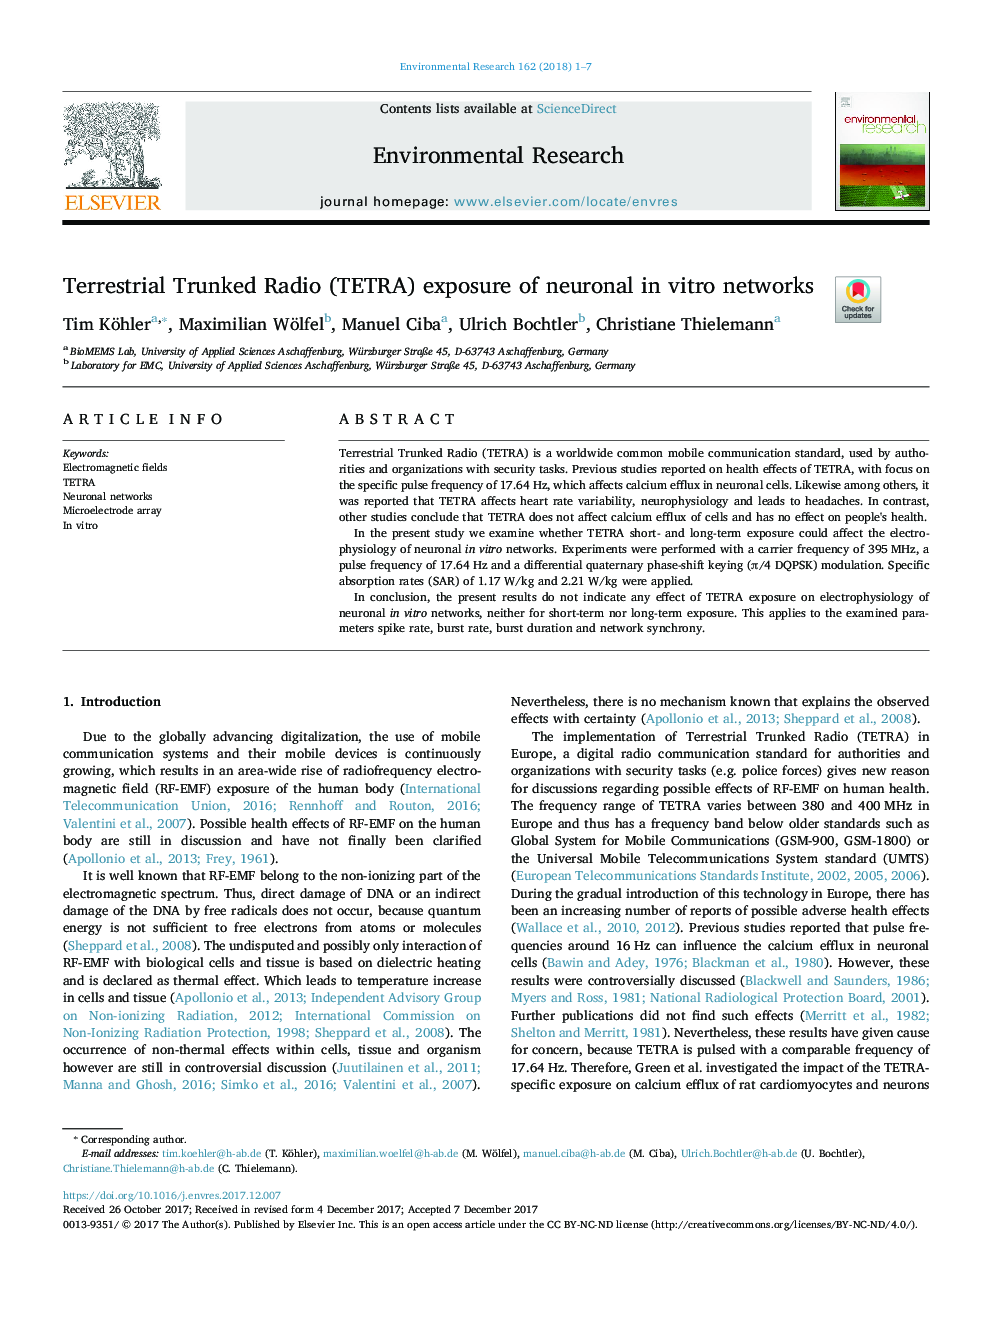 Terrestrial Trunked Radio (TETRA) exposure of neuronal in vitro networks